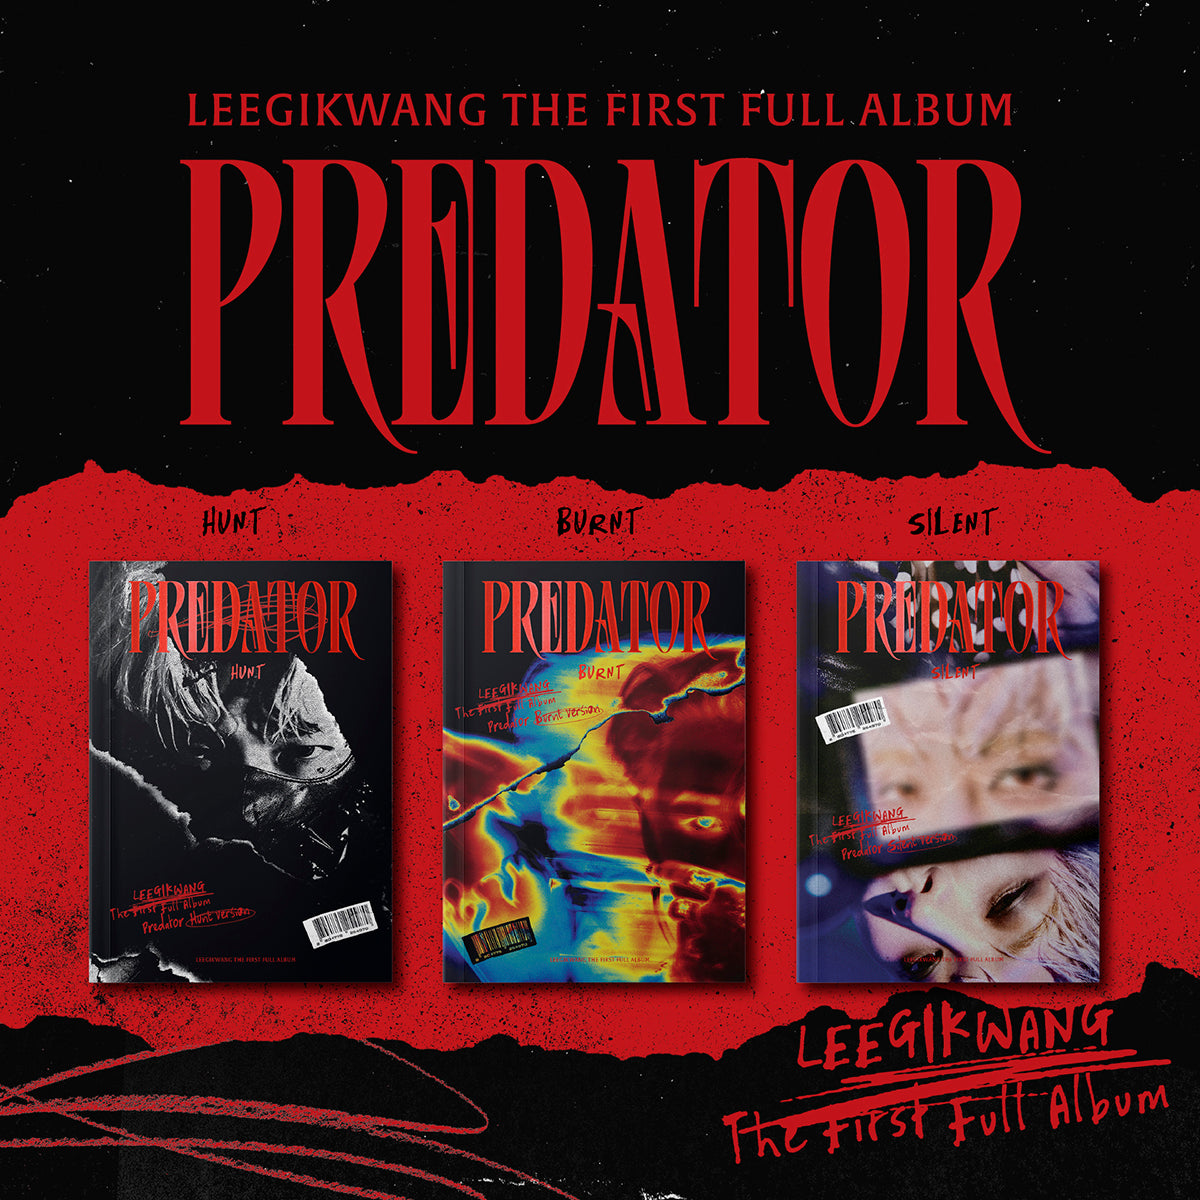 LEE GI KWANG (Highlight) - Predator (Random Ver.)